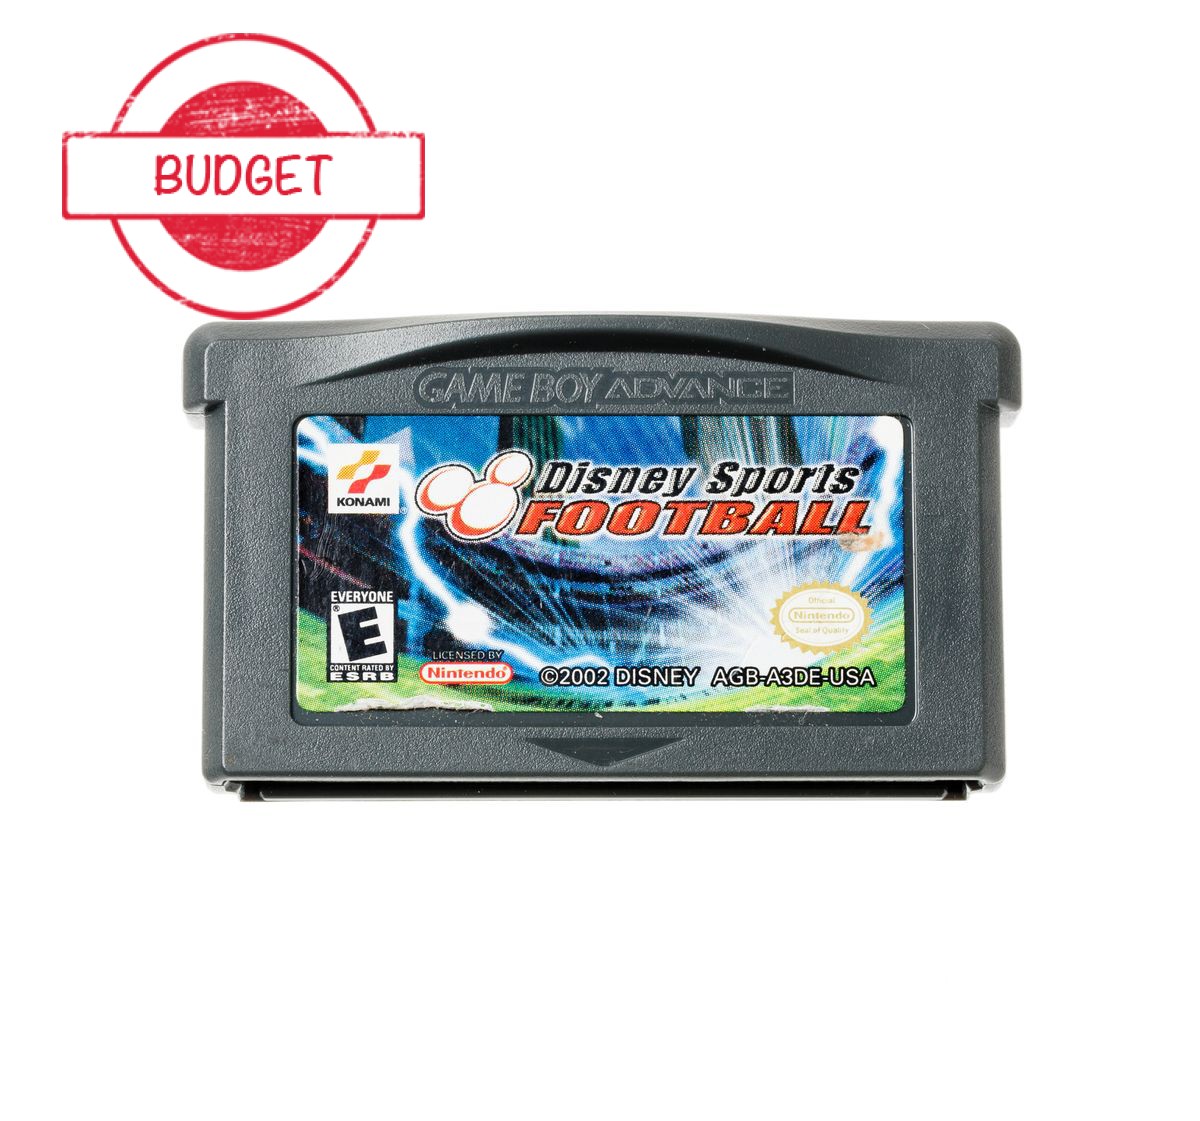 Disney Sports Football - Budget - Gameboy Advance Games